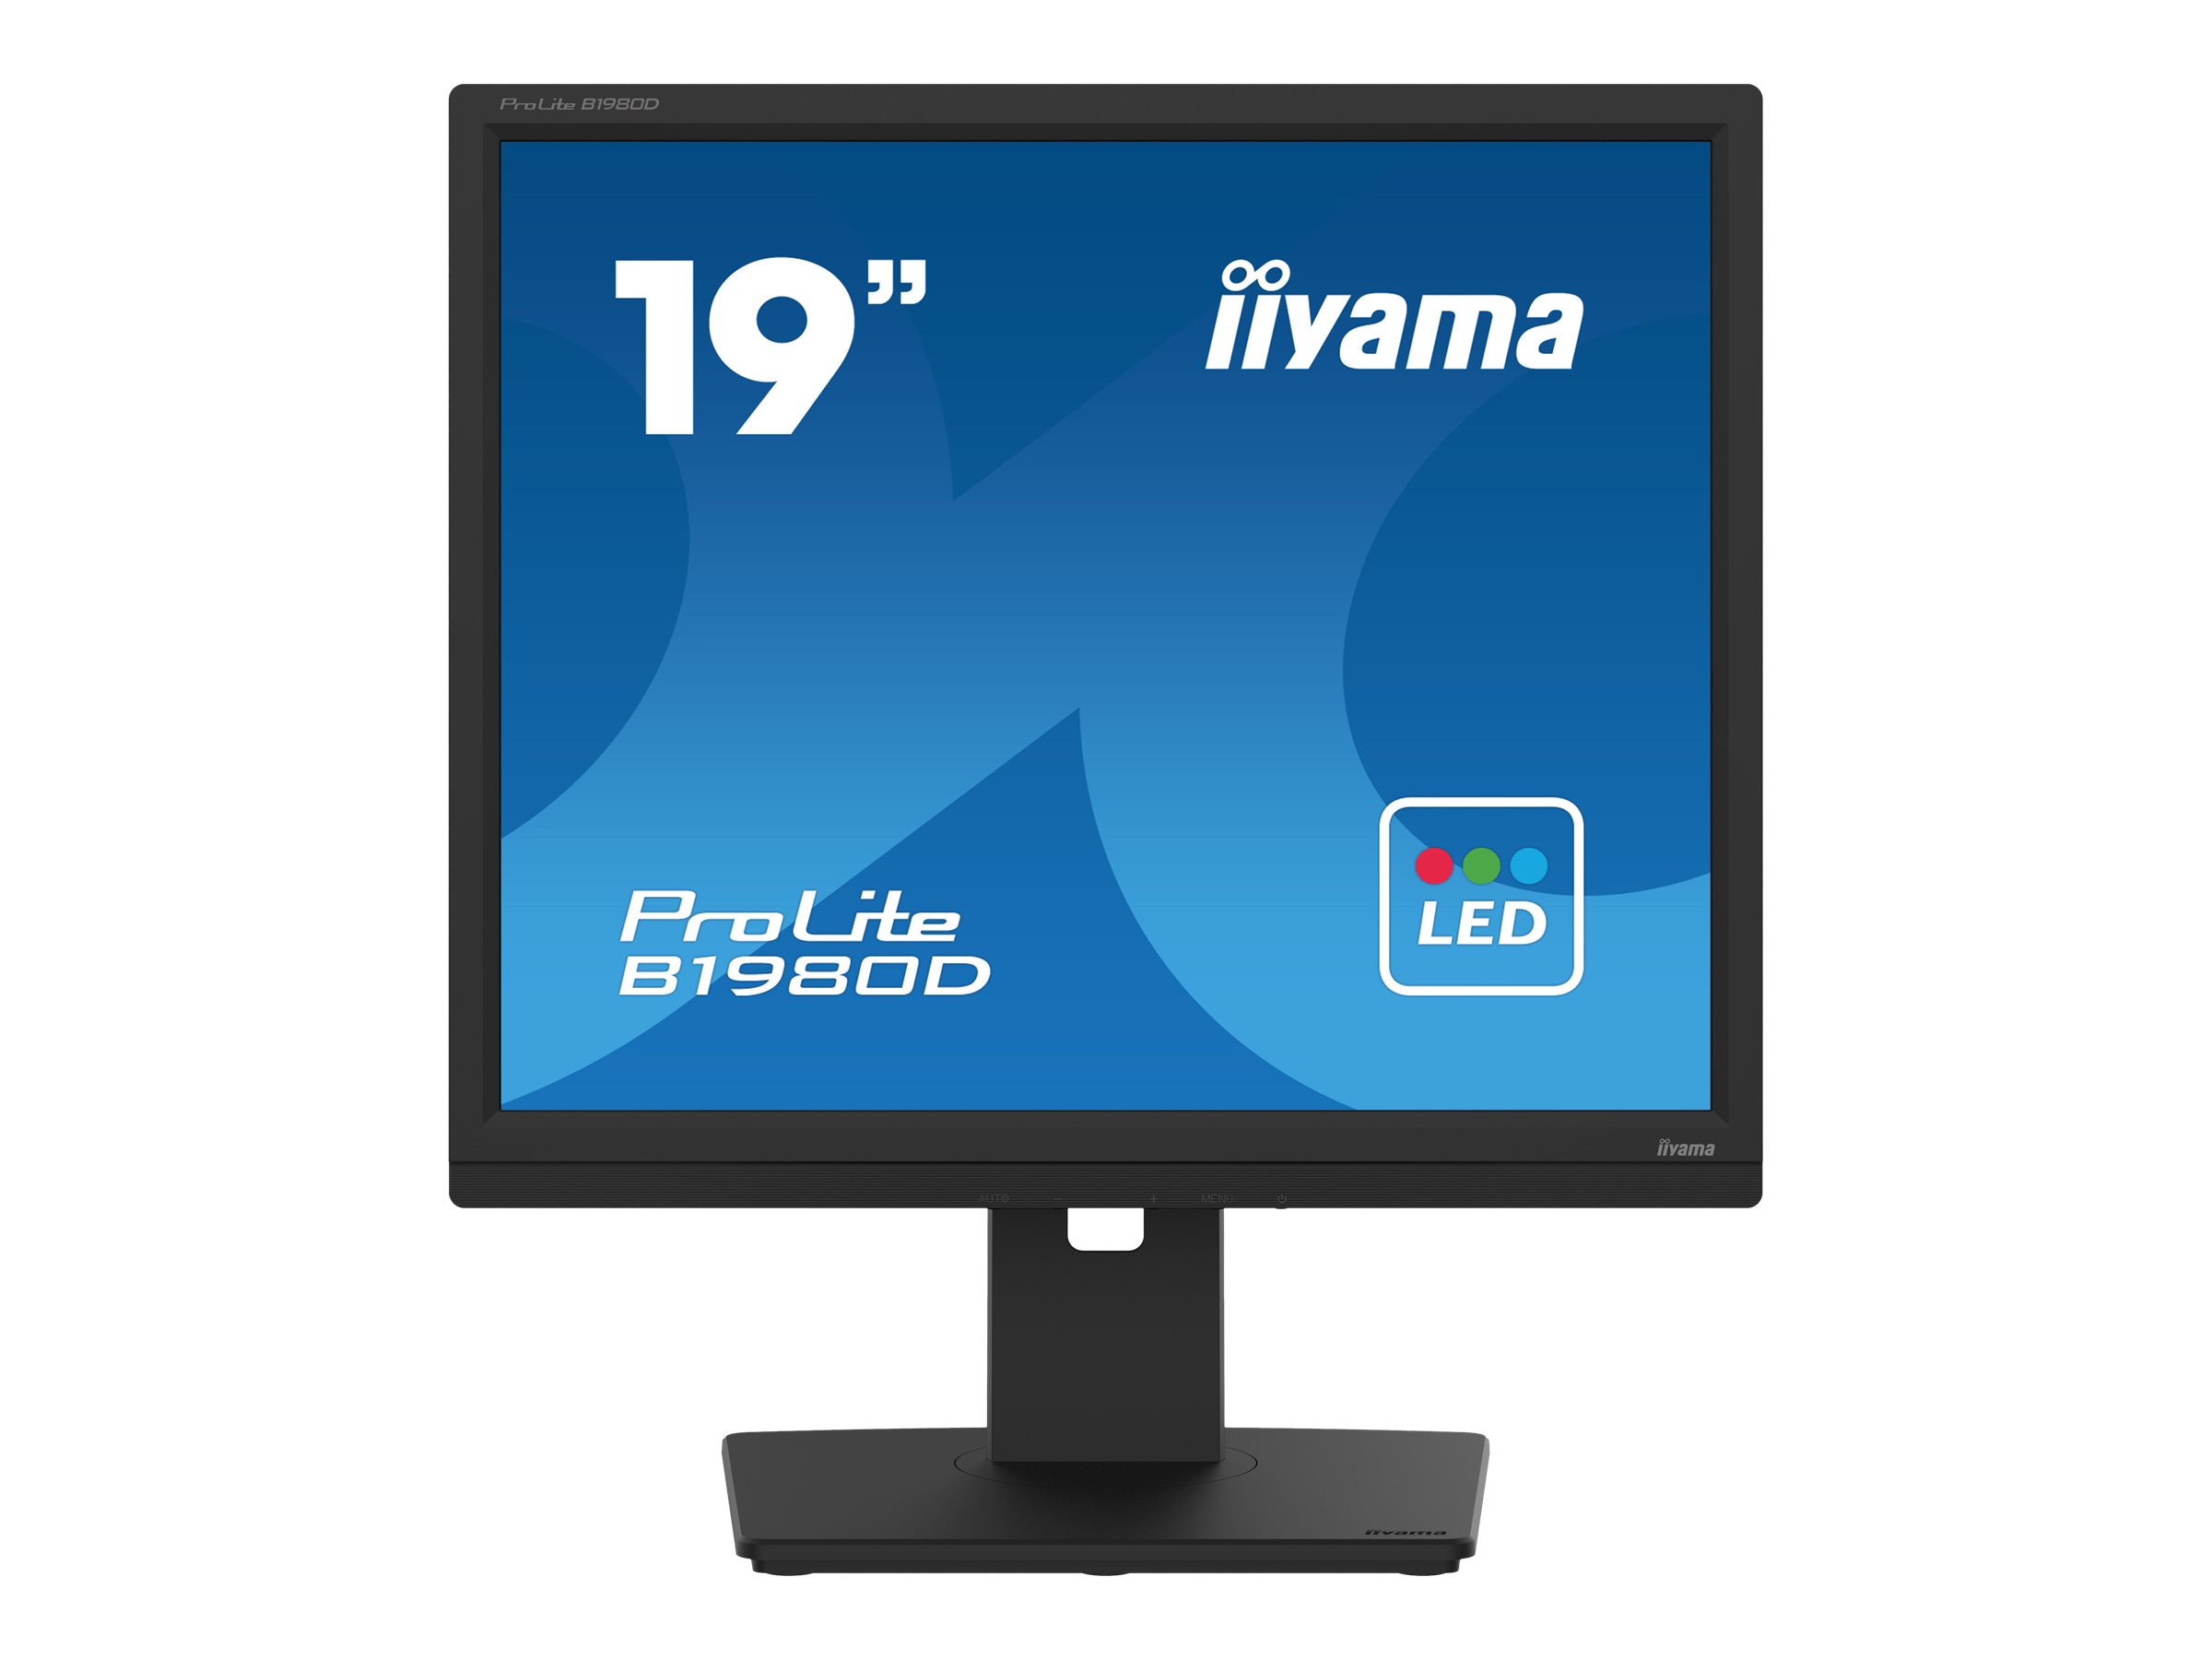 Iiyama TFT Prolite B1980D 48cm black 19/1280x1024/DVI/VGA/pivot/höv